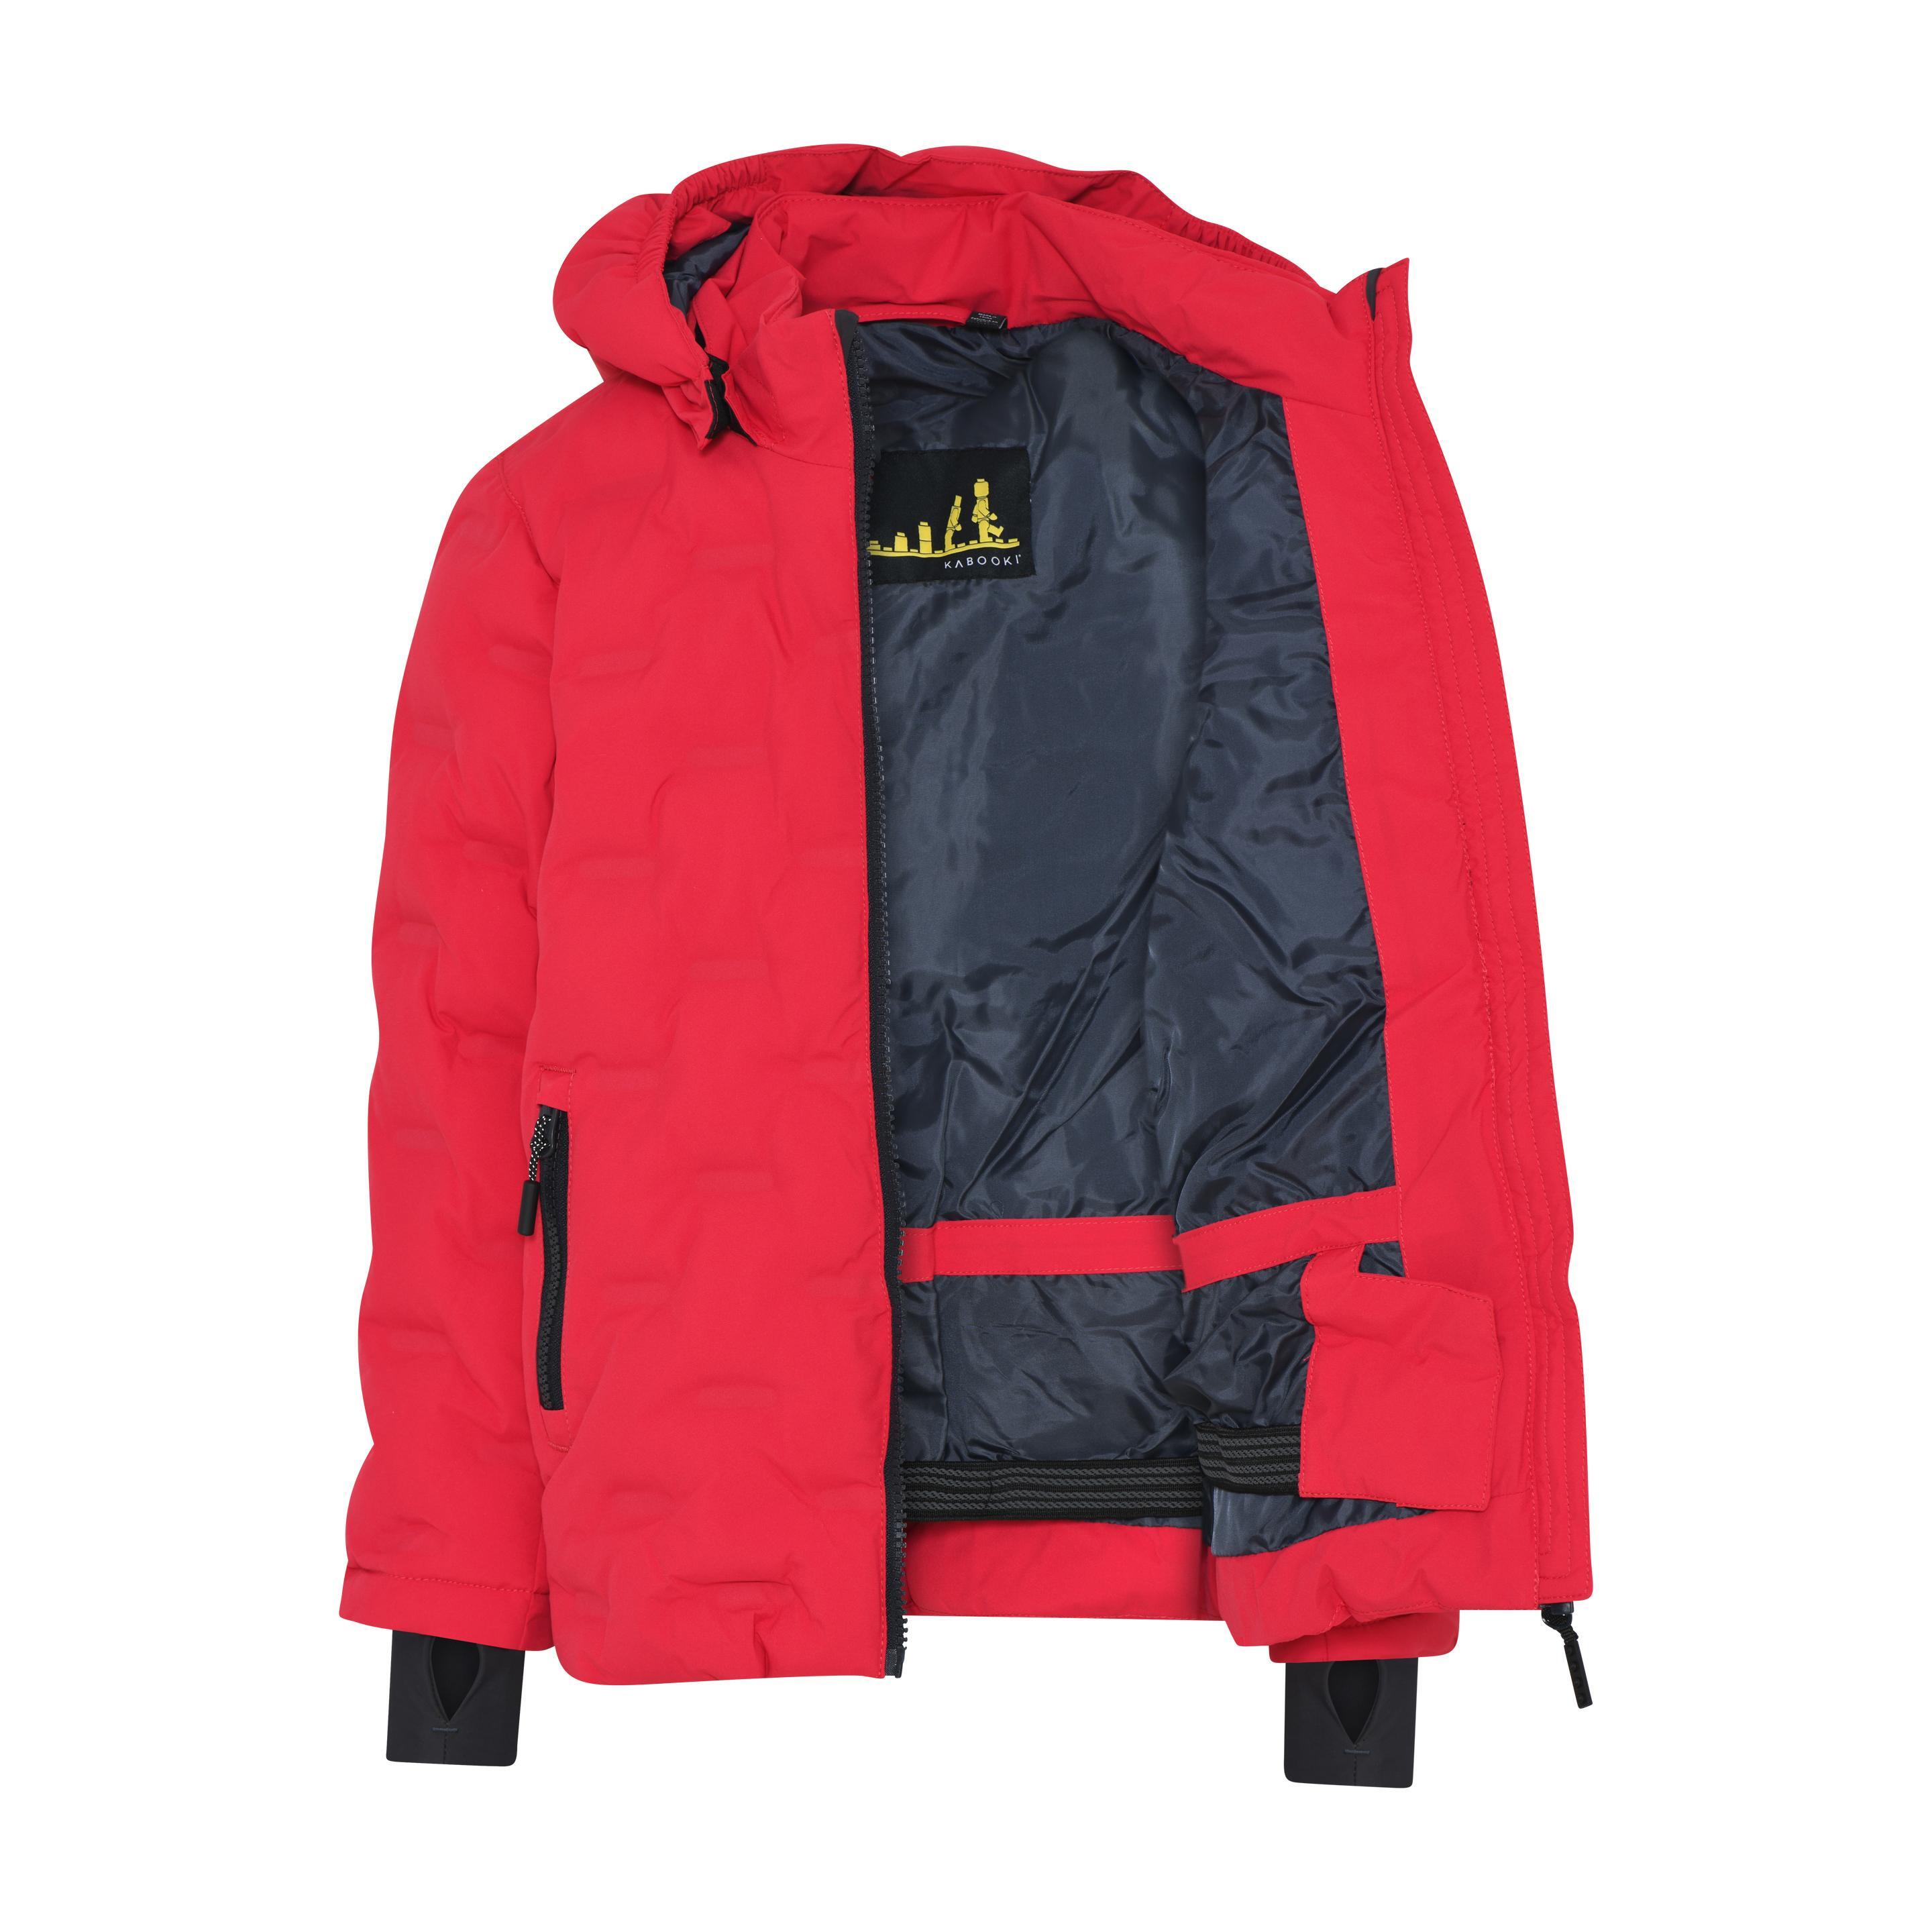 Legowear Jacket Lwjipe 706 | NordBaby™ Coral Red